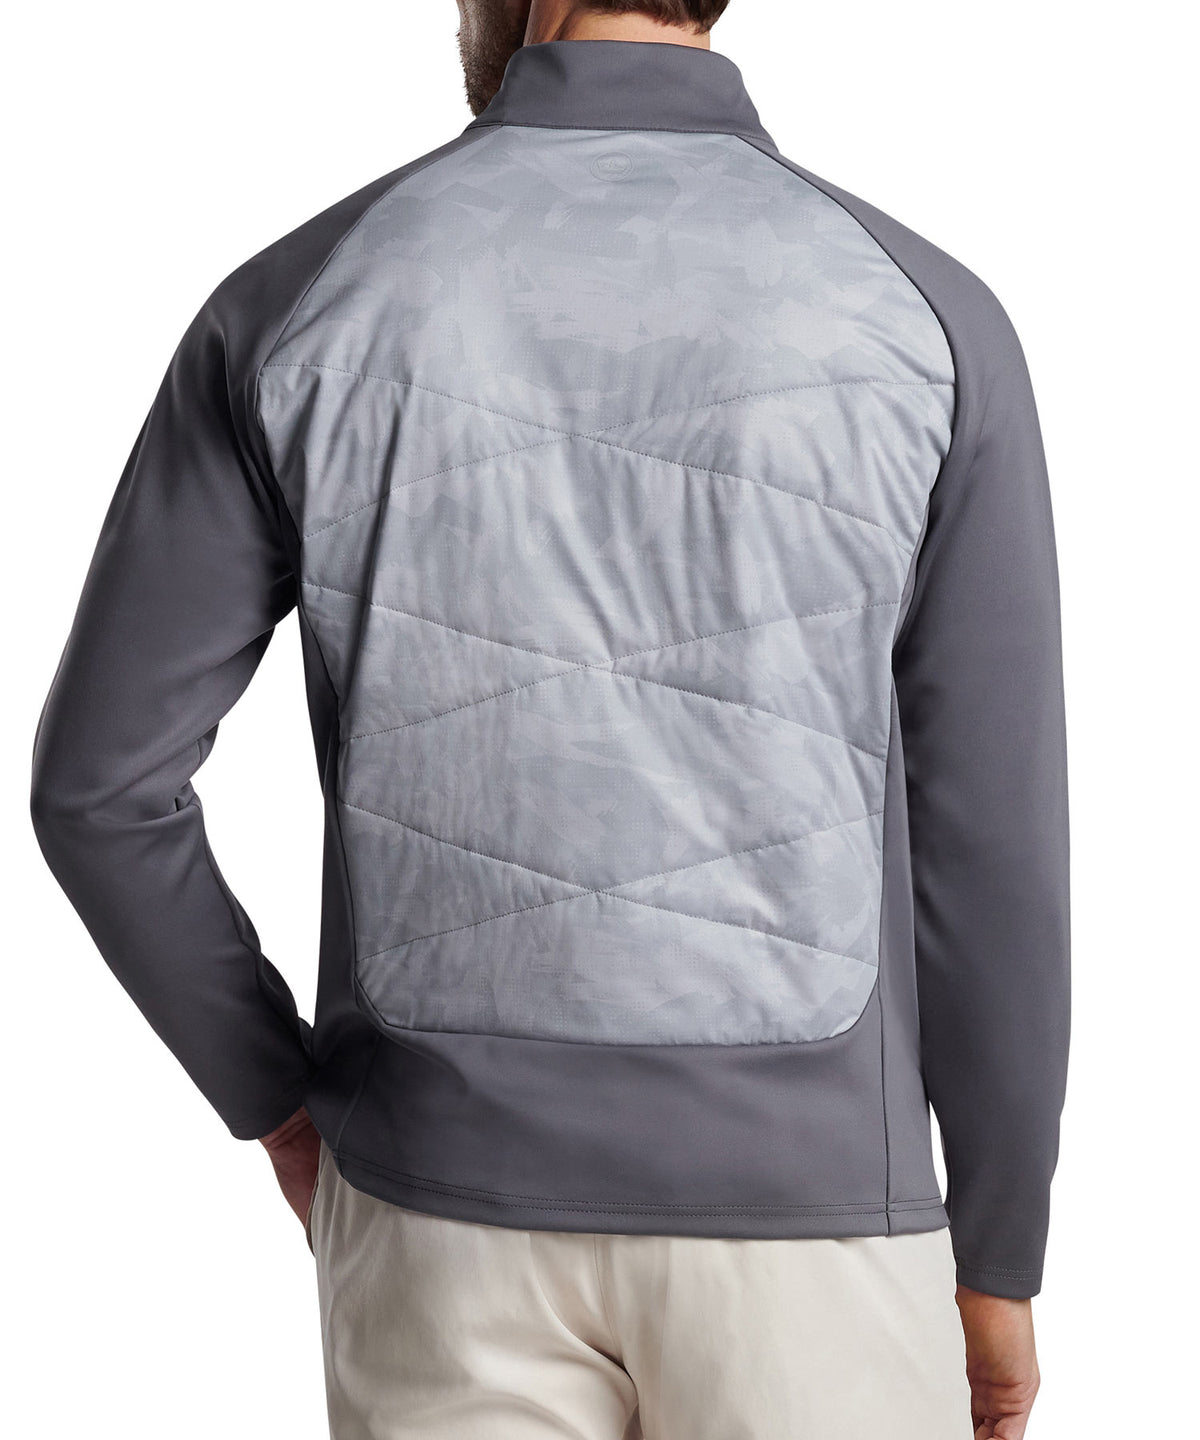 Peter Millar Endeavor Hybrid Jacket, Big & Tall